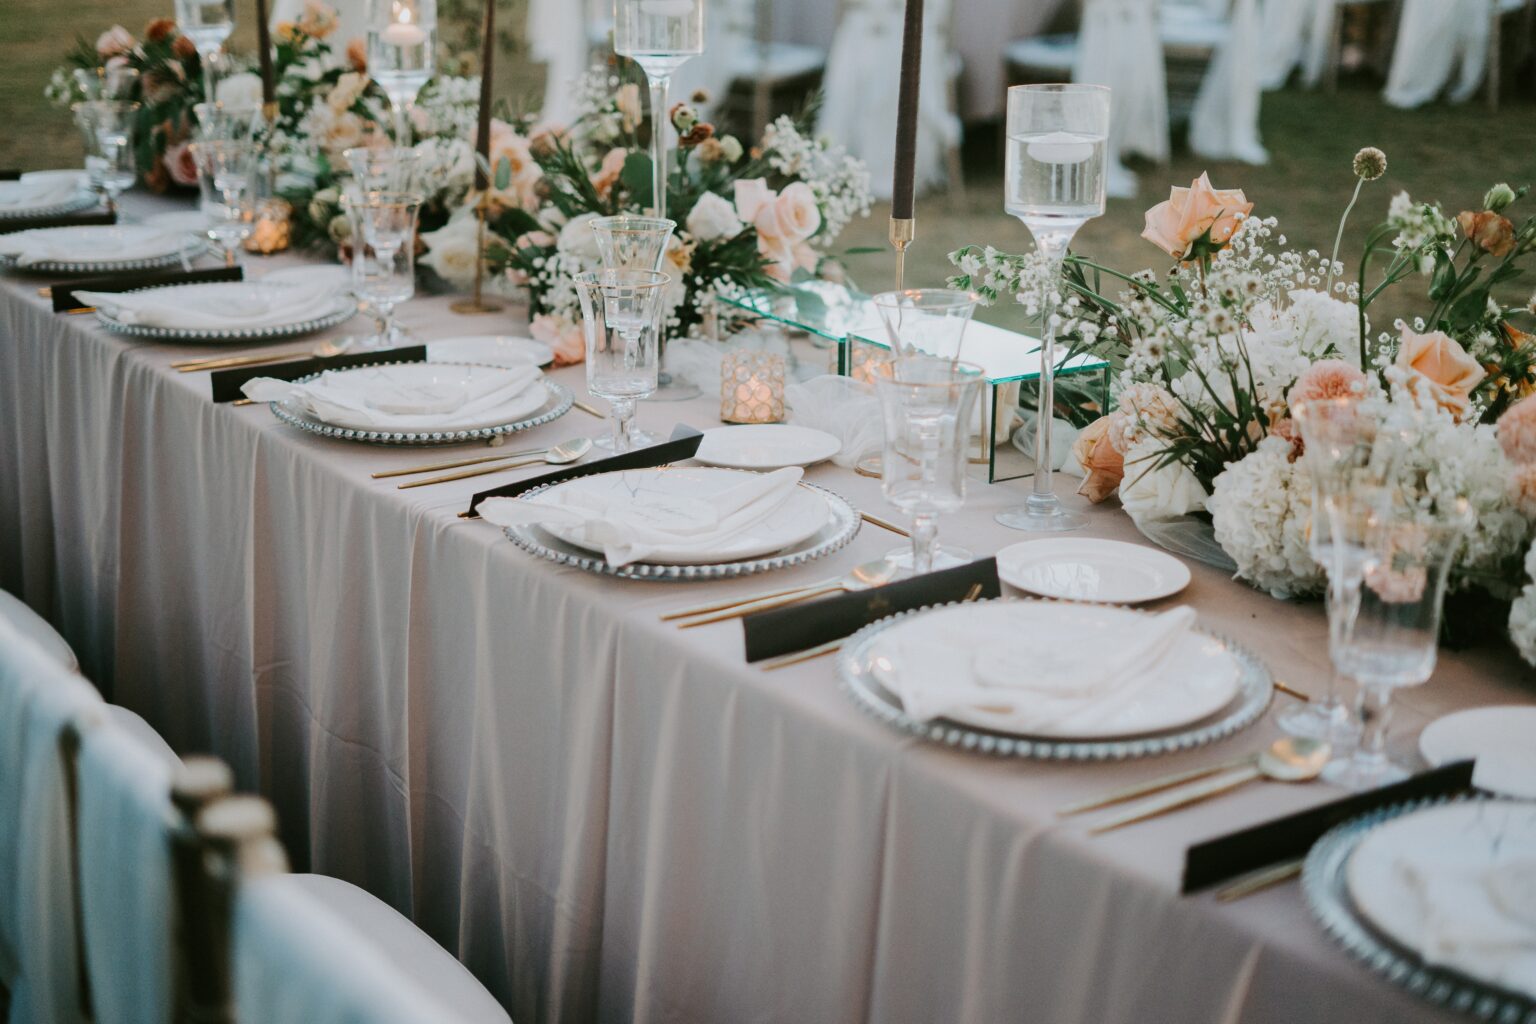 decorated table setting for wedding celebration 1